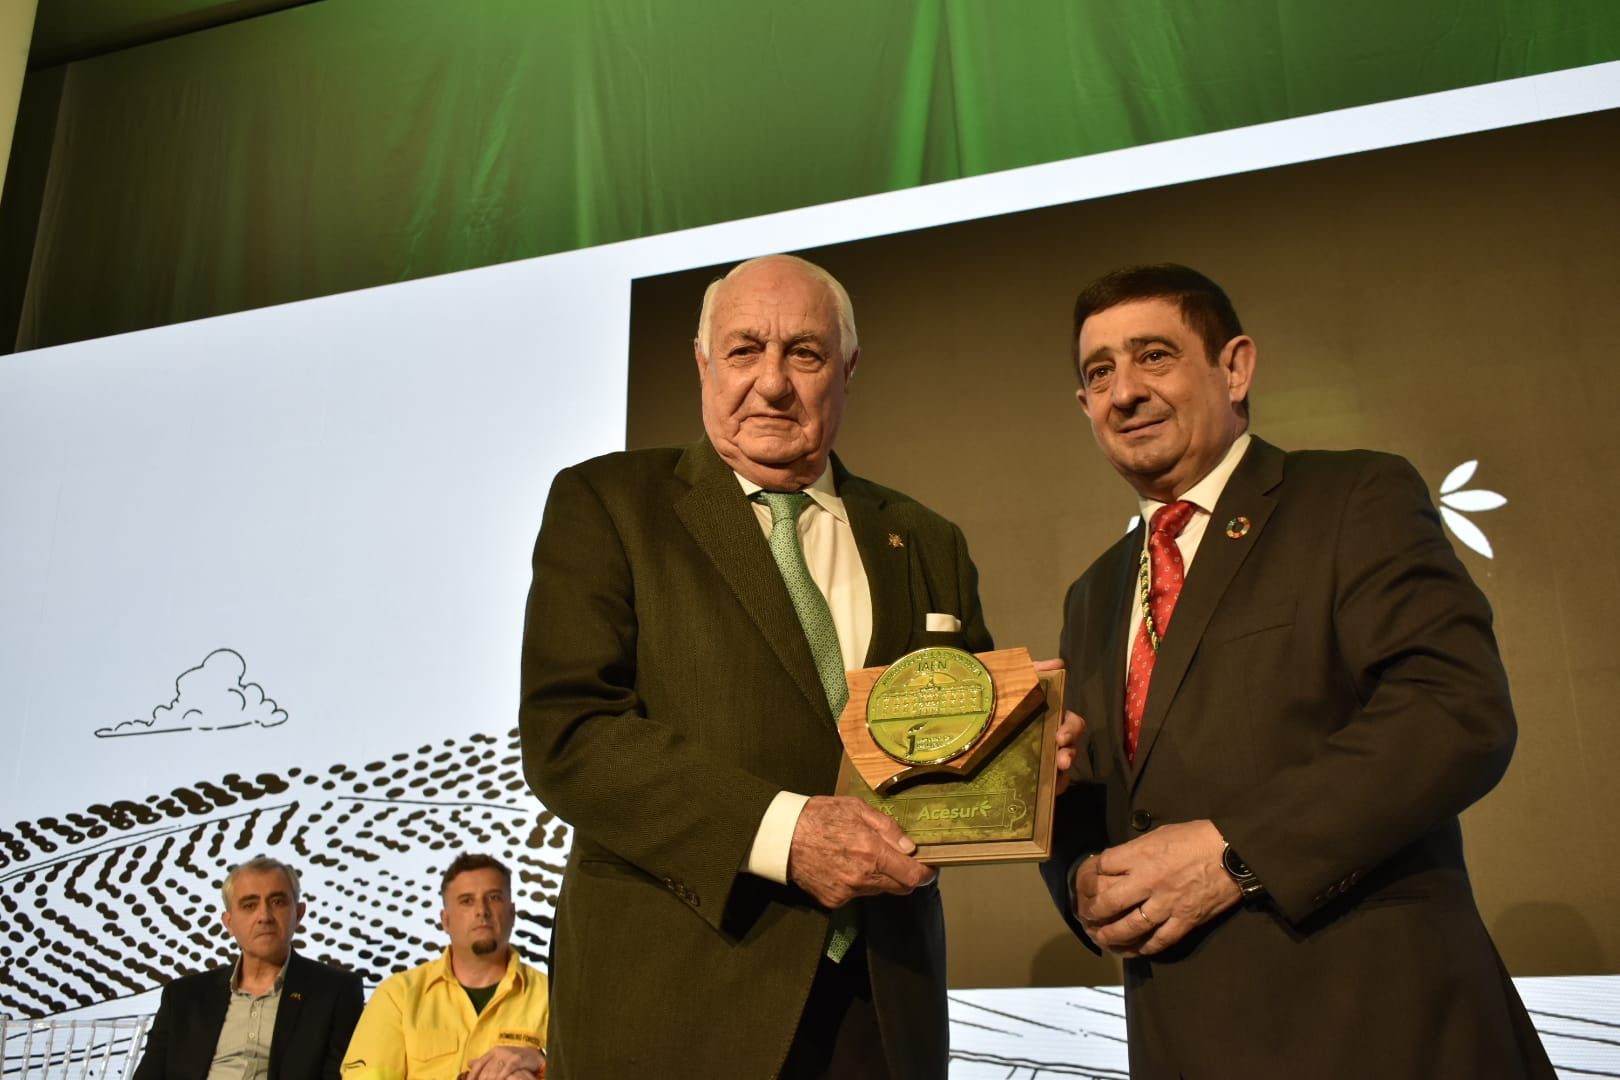 Francisco Reyes presents the award to Juan Ramón Guillén, president of Acesur